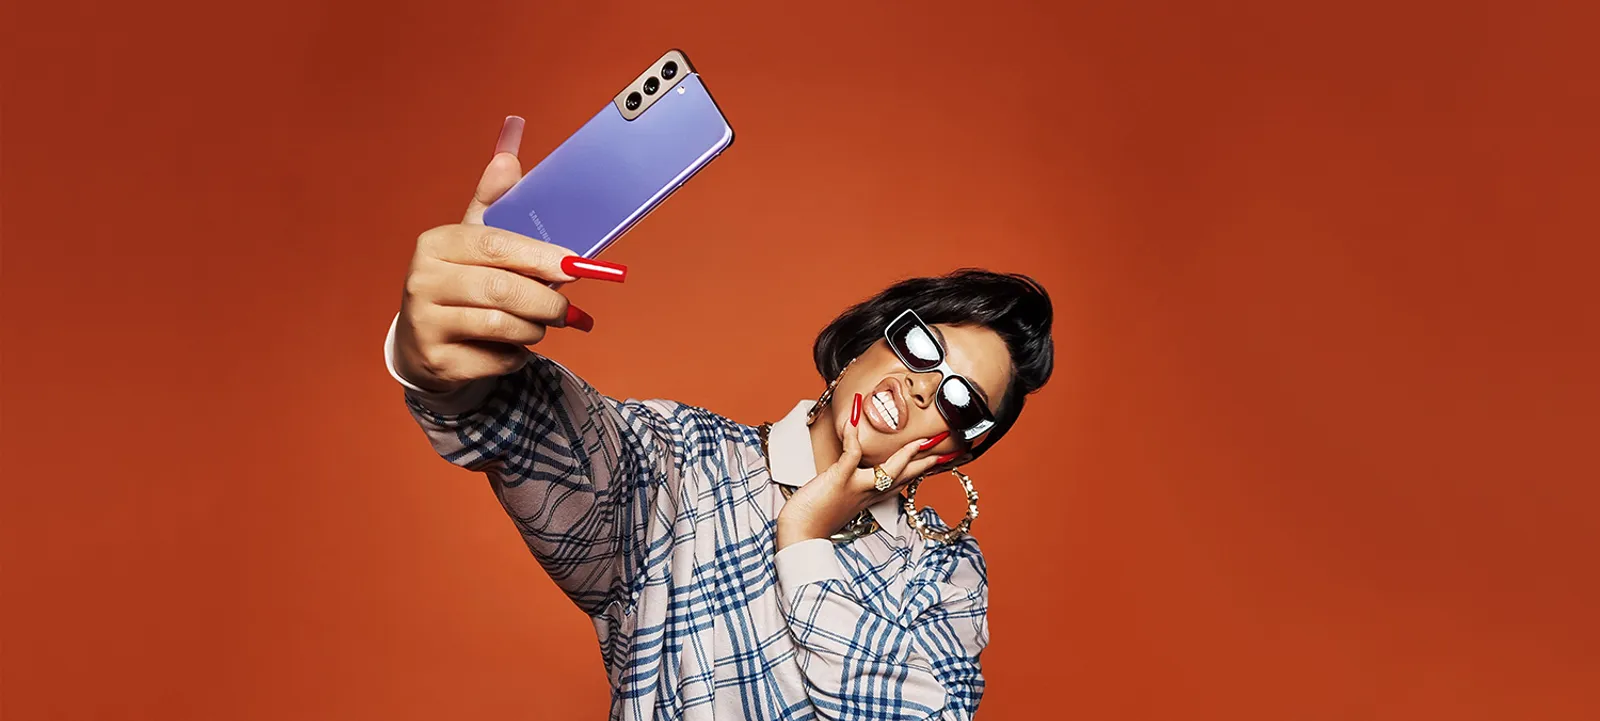 Hobi Foto? Wajib Coba Fitur Single Take Samsung Galaxy S21 Series 5G! 